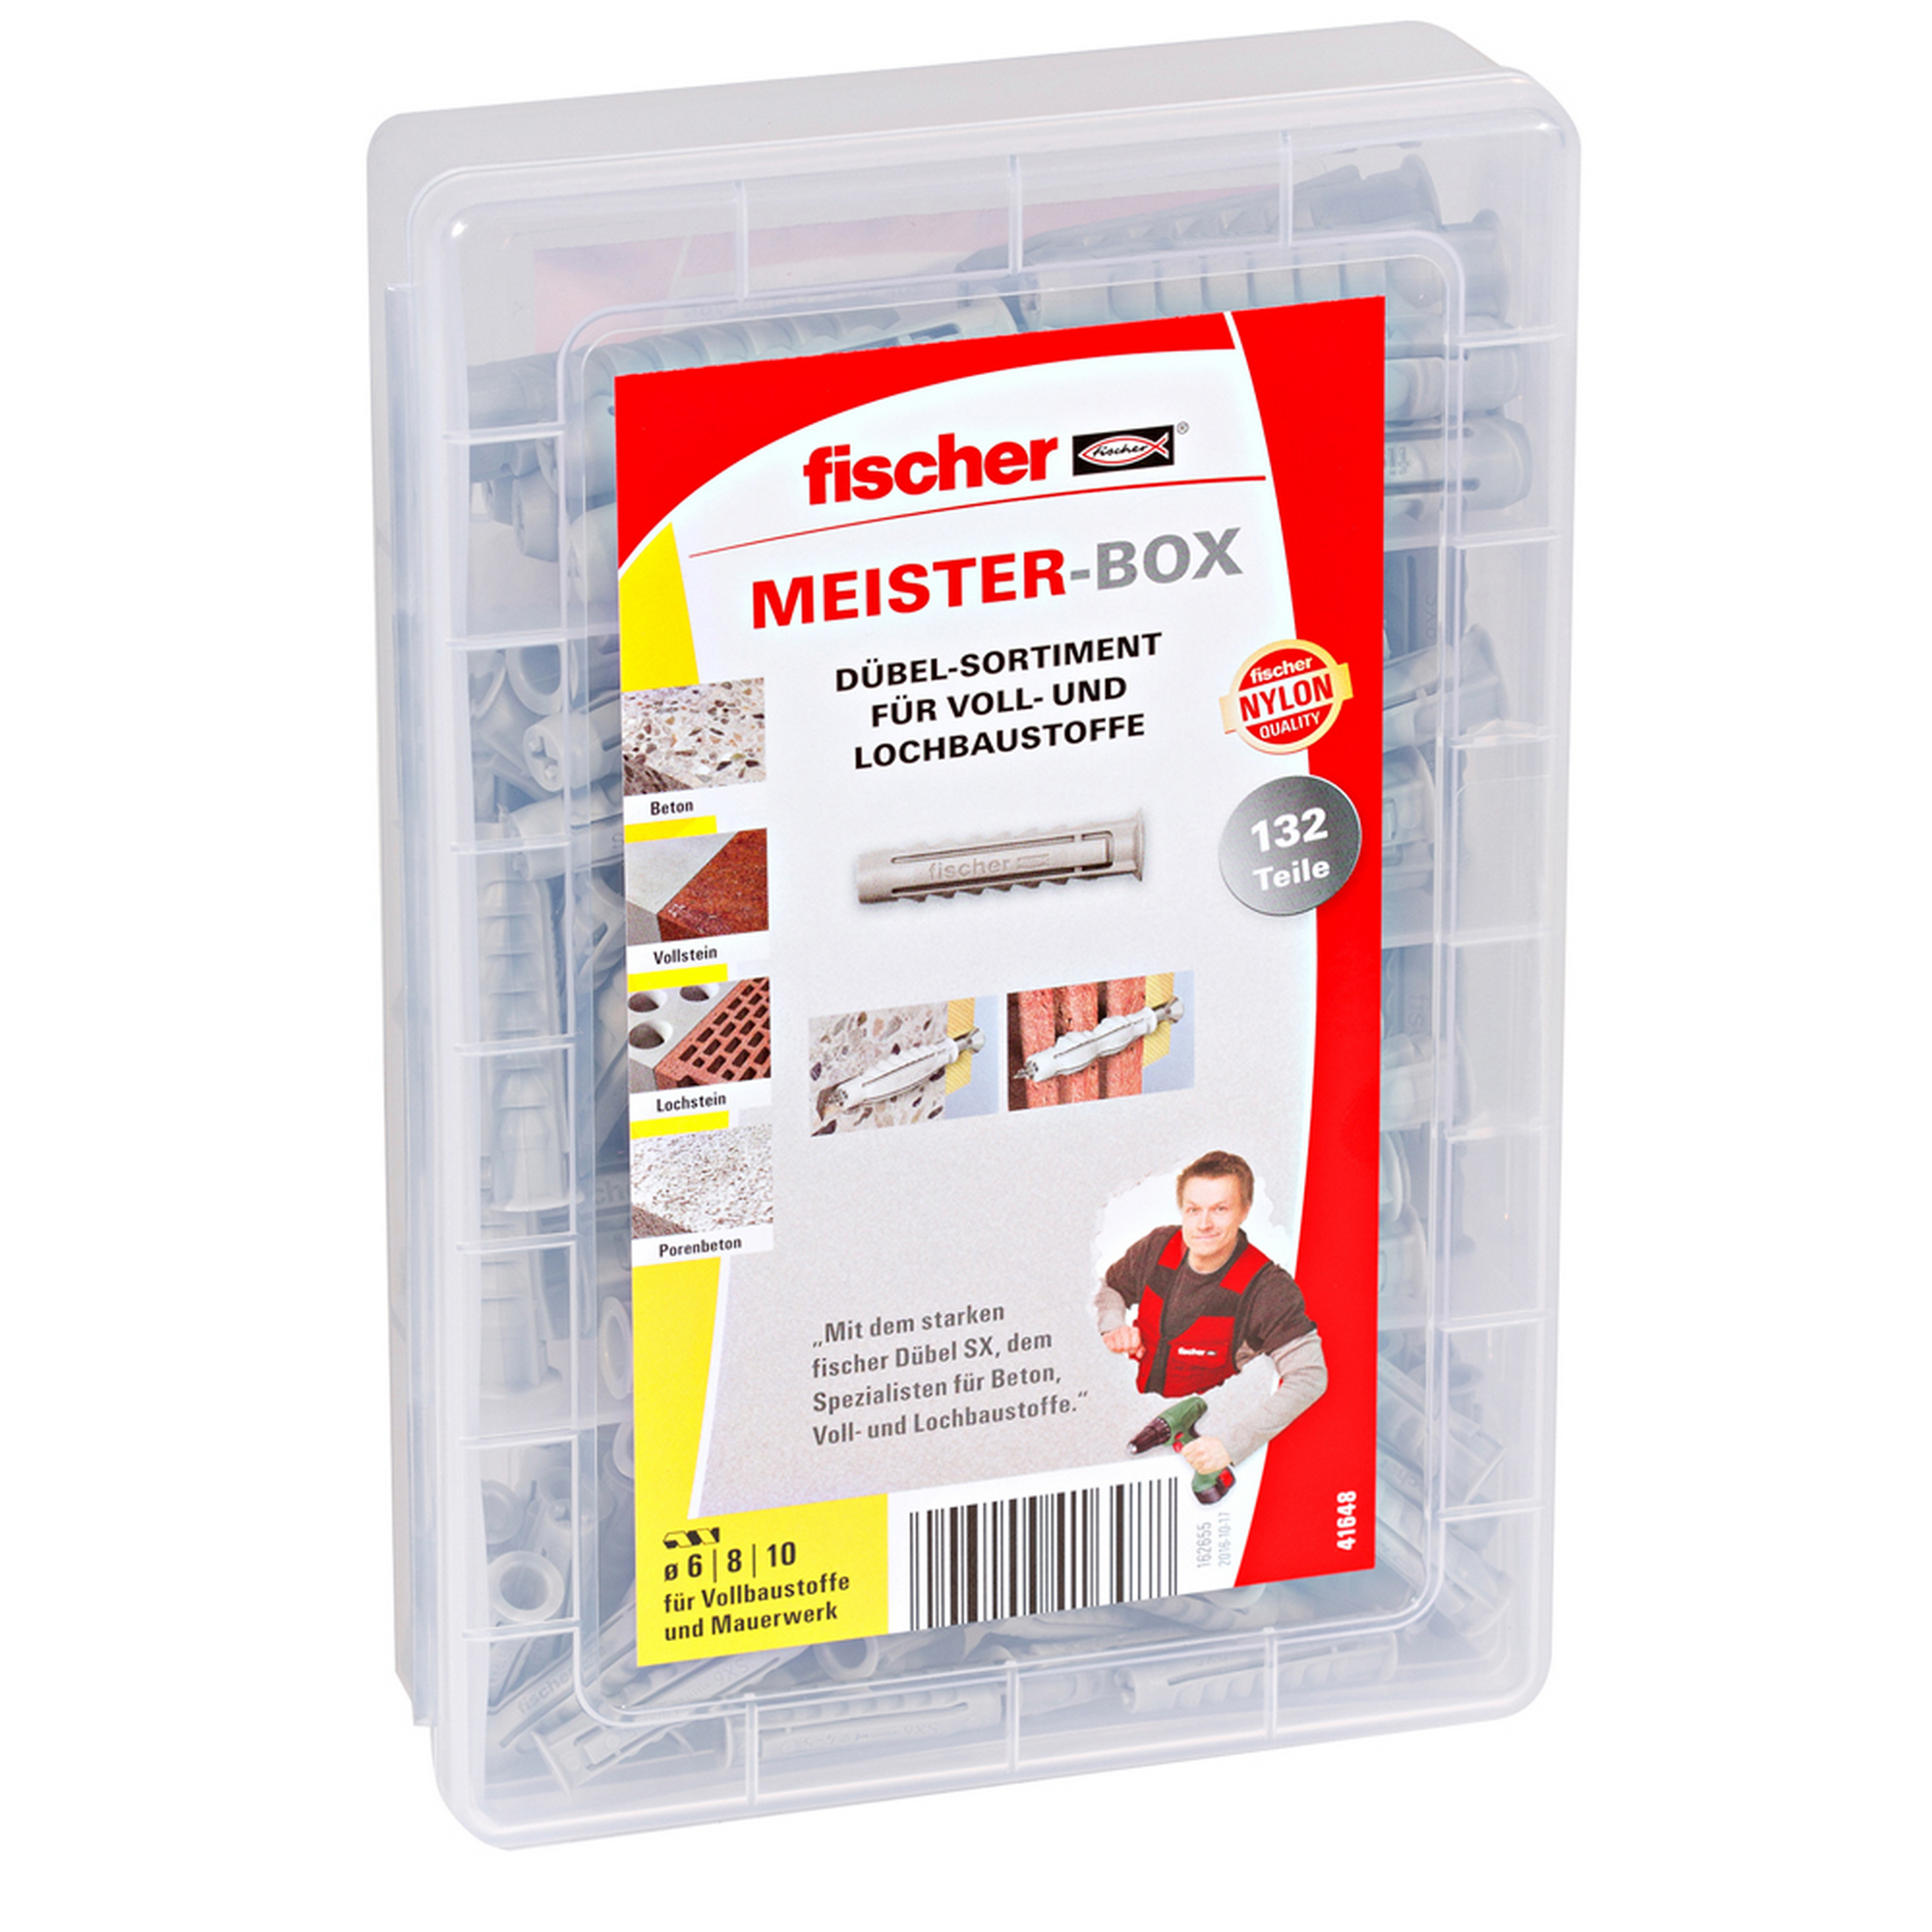 fischer Meister-Box SX-Dübel 132-teilig + product picture